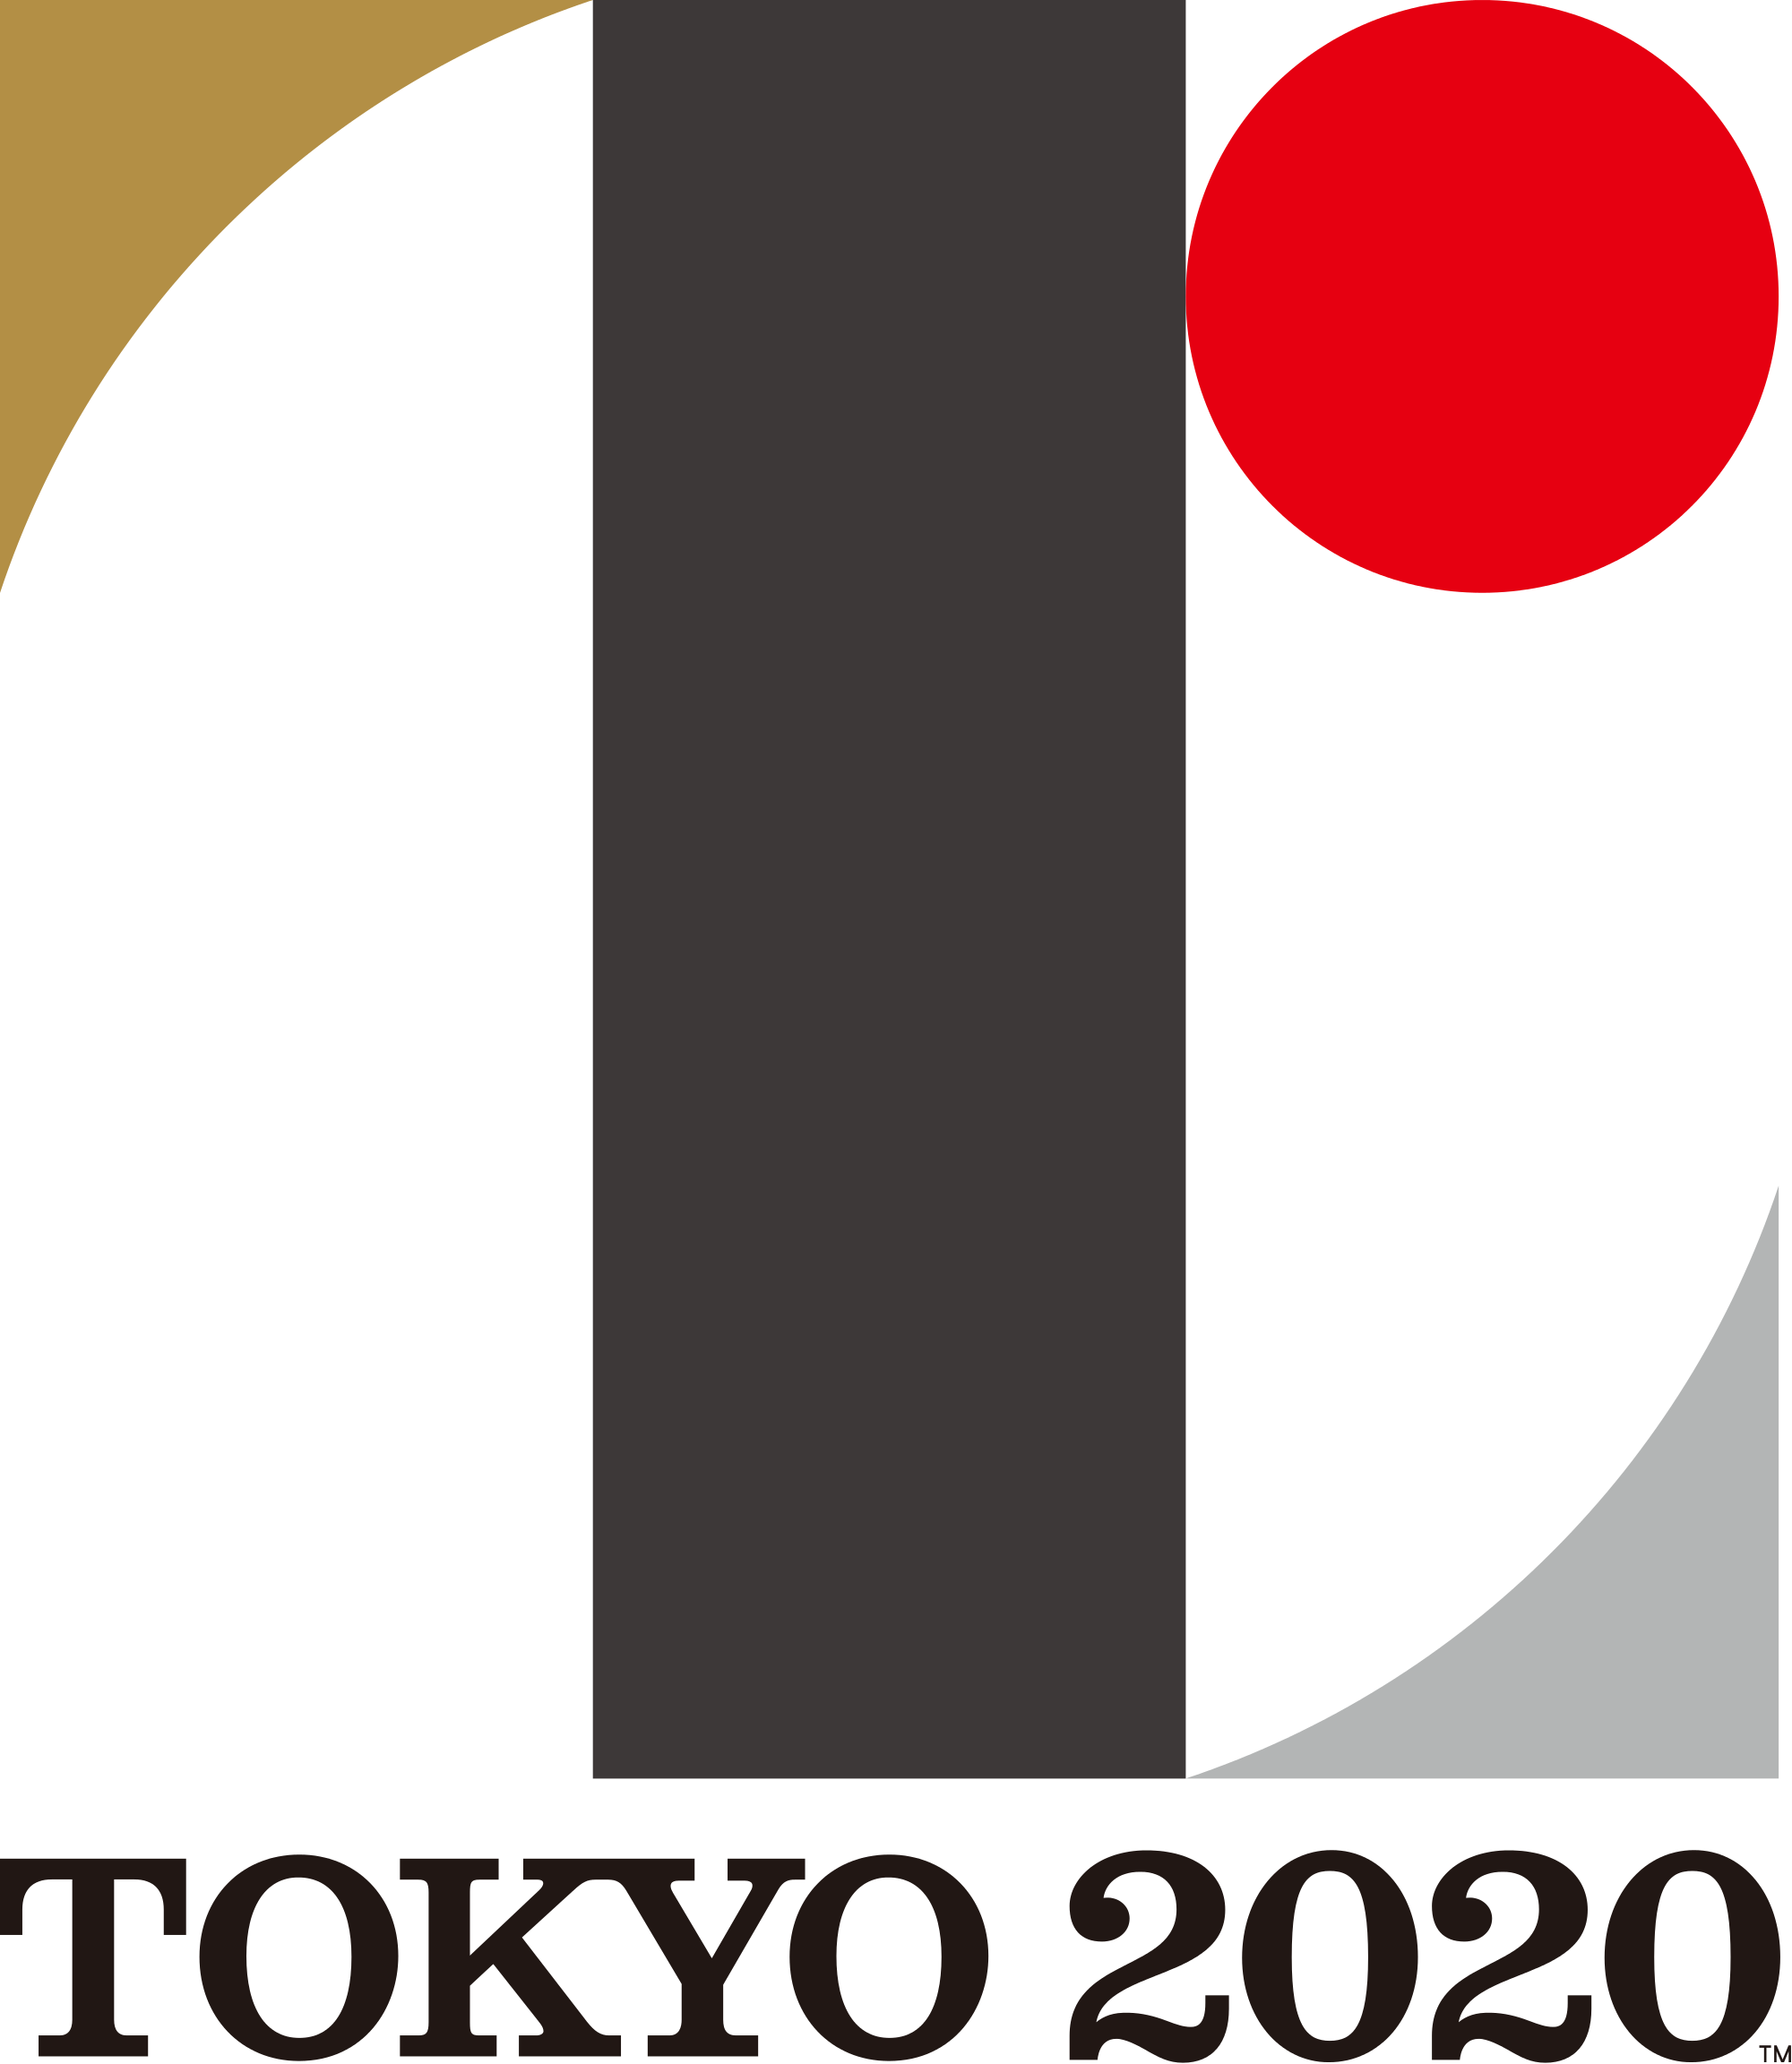 Tokyo 2020 Paralympic games l